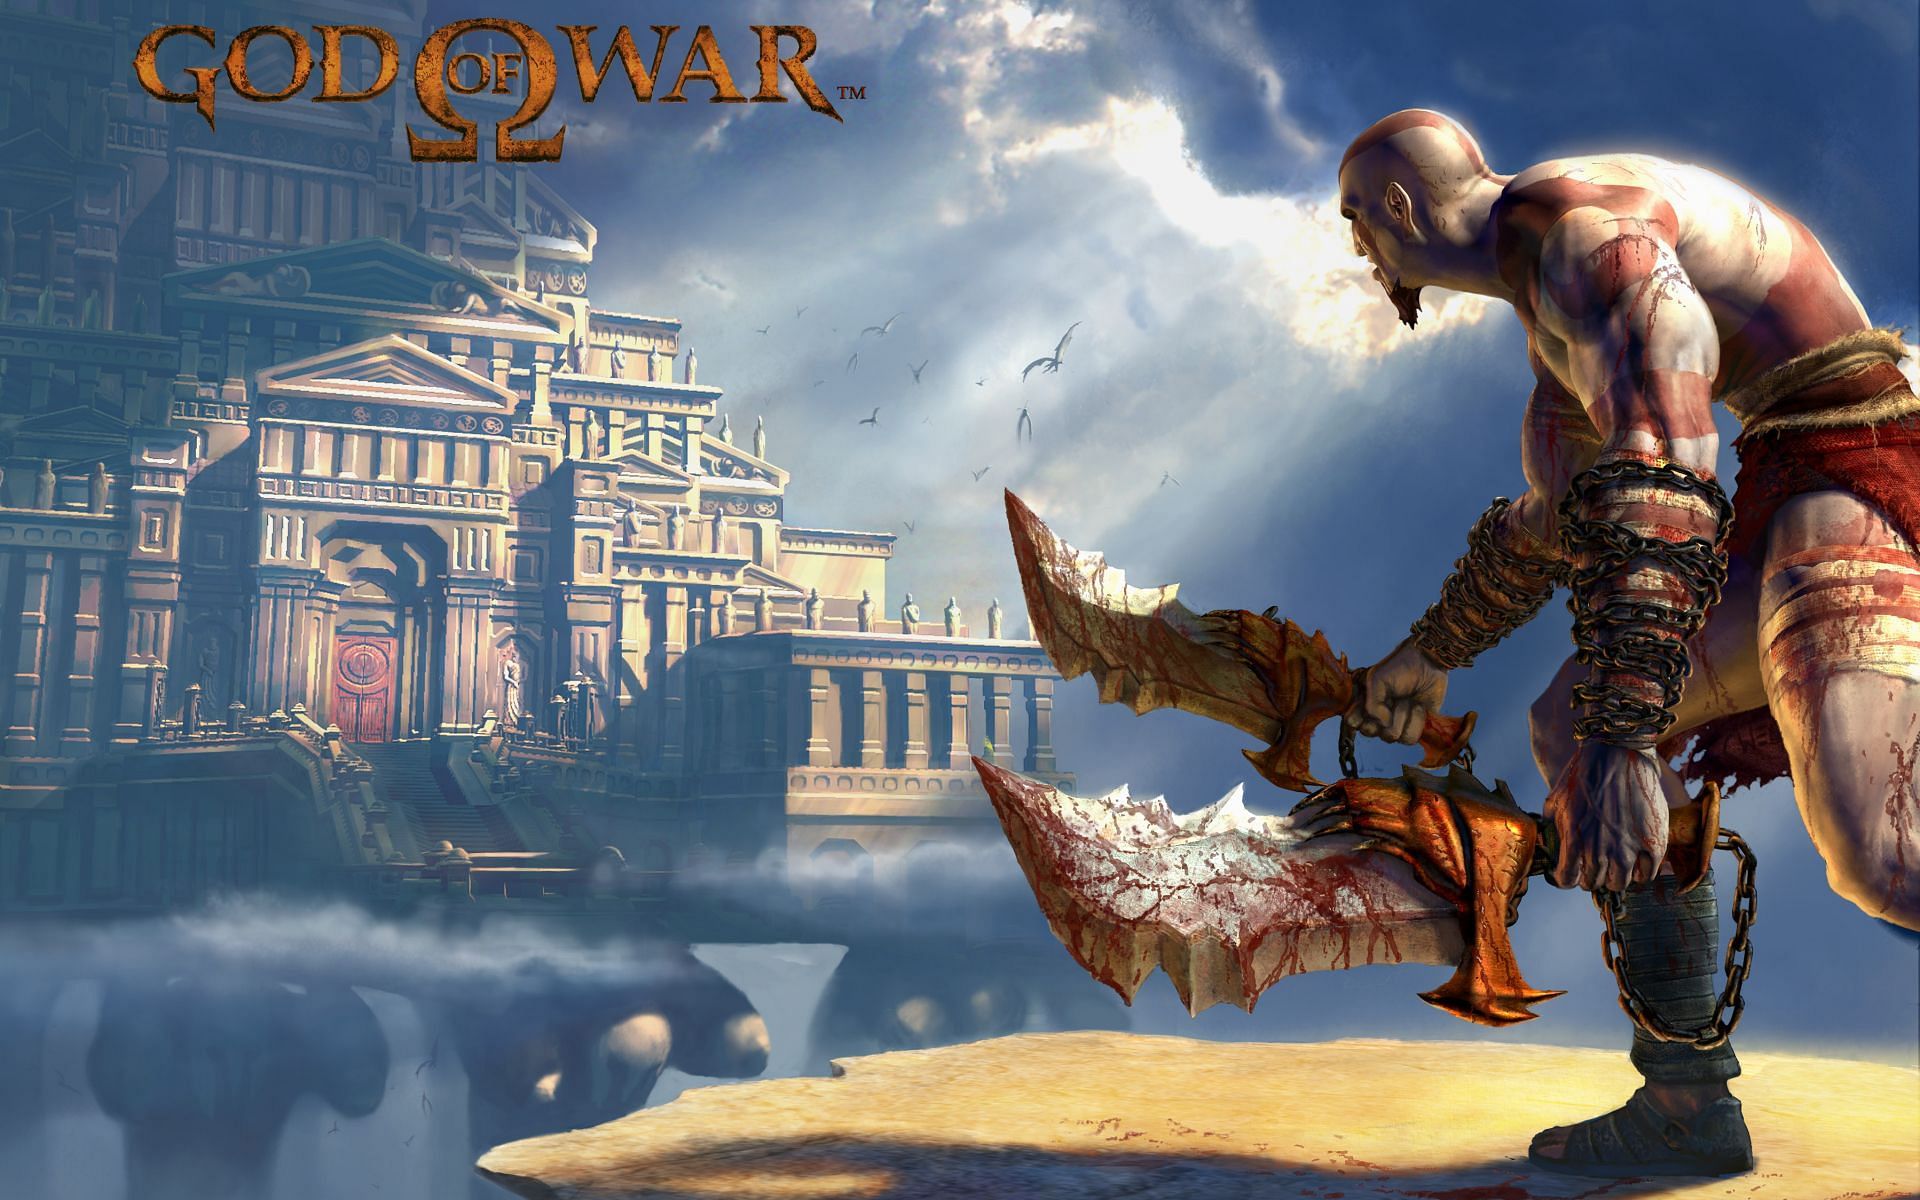 God of War (Image via Santa Monica Studios)